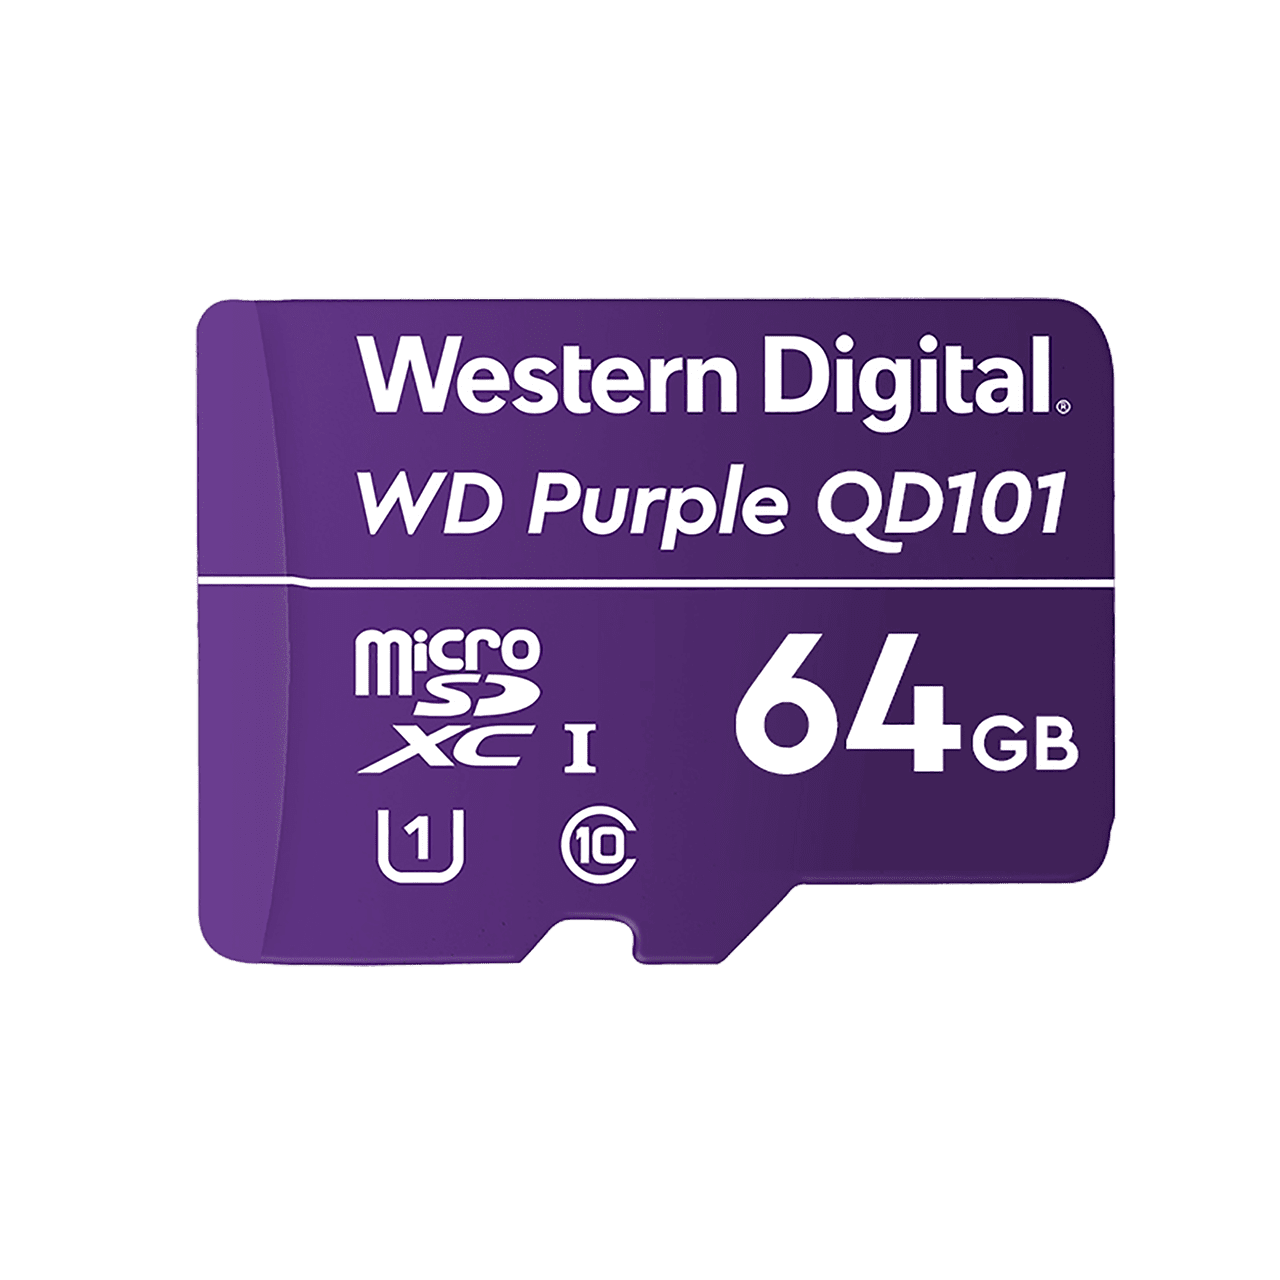 wd purple microsd